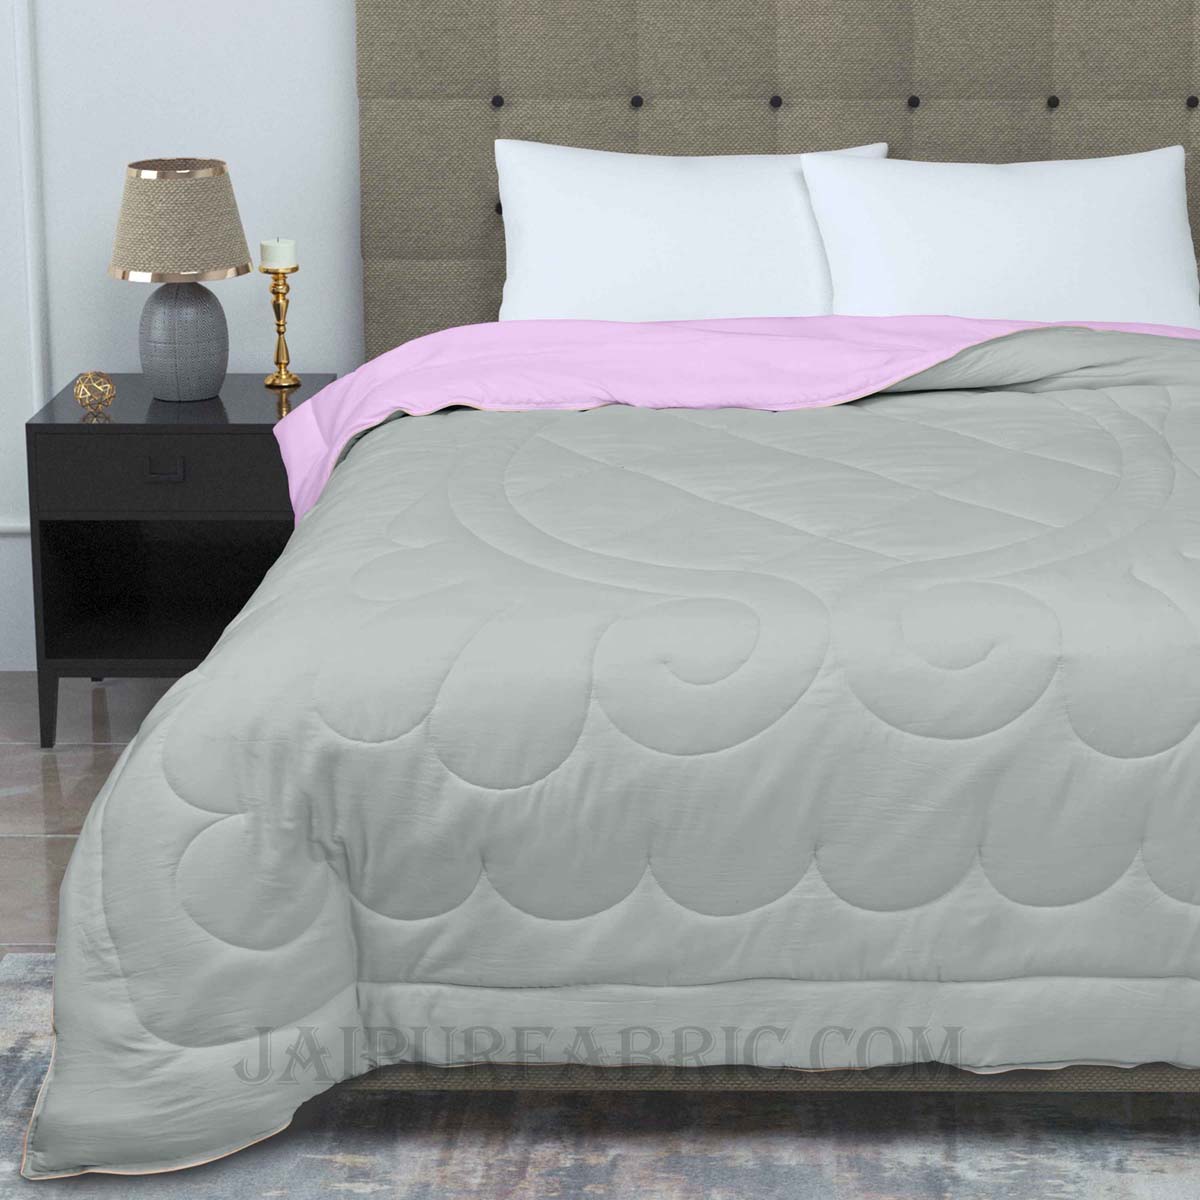 Ultra Soft Fluffy Reversible Purple Grey Dual Tone Pure Cotton Cover Premium Micro Fibre Filling Double Bed Comforter